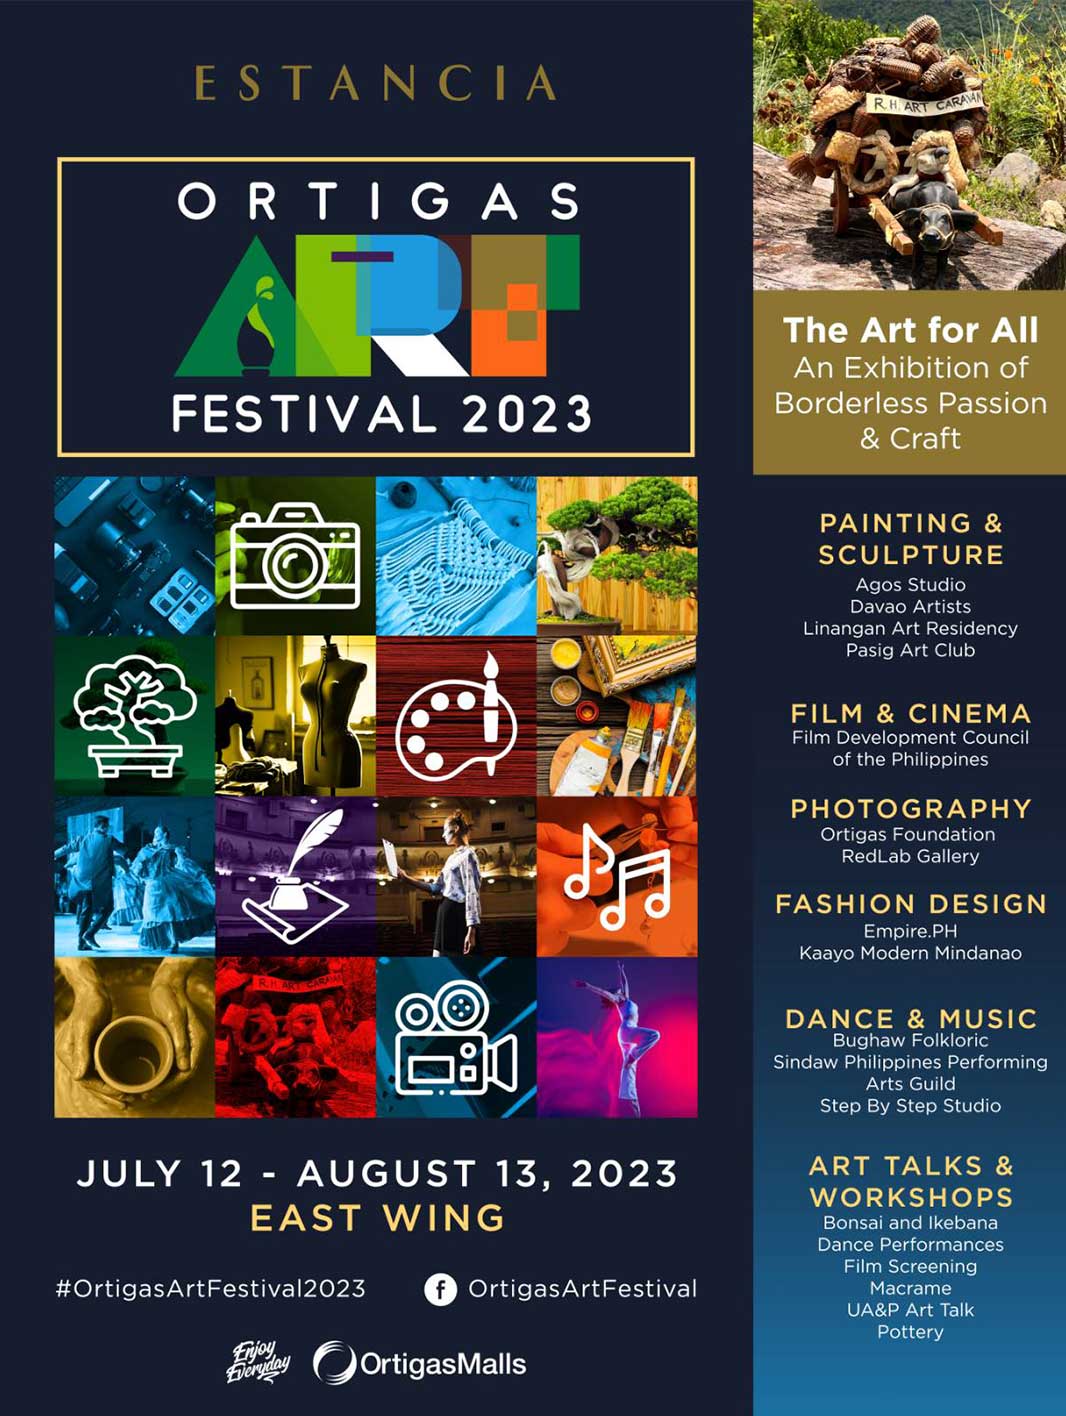 Ortigas Art Festival 2023: Creating connections through accessible art exhibits